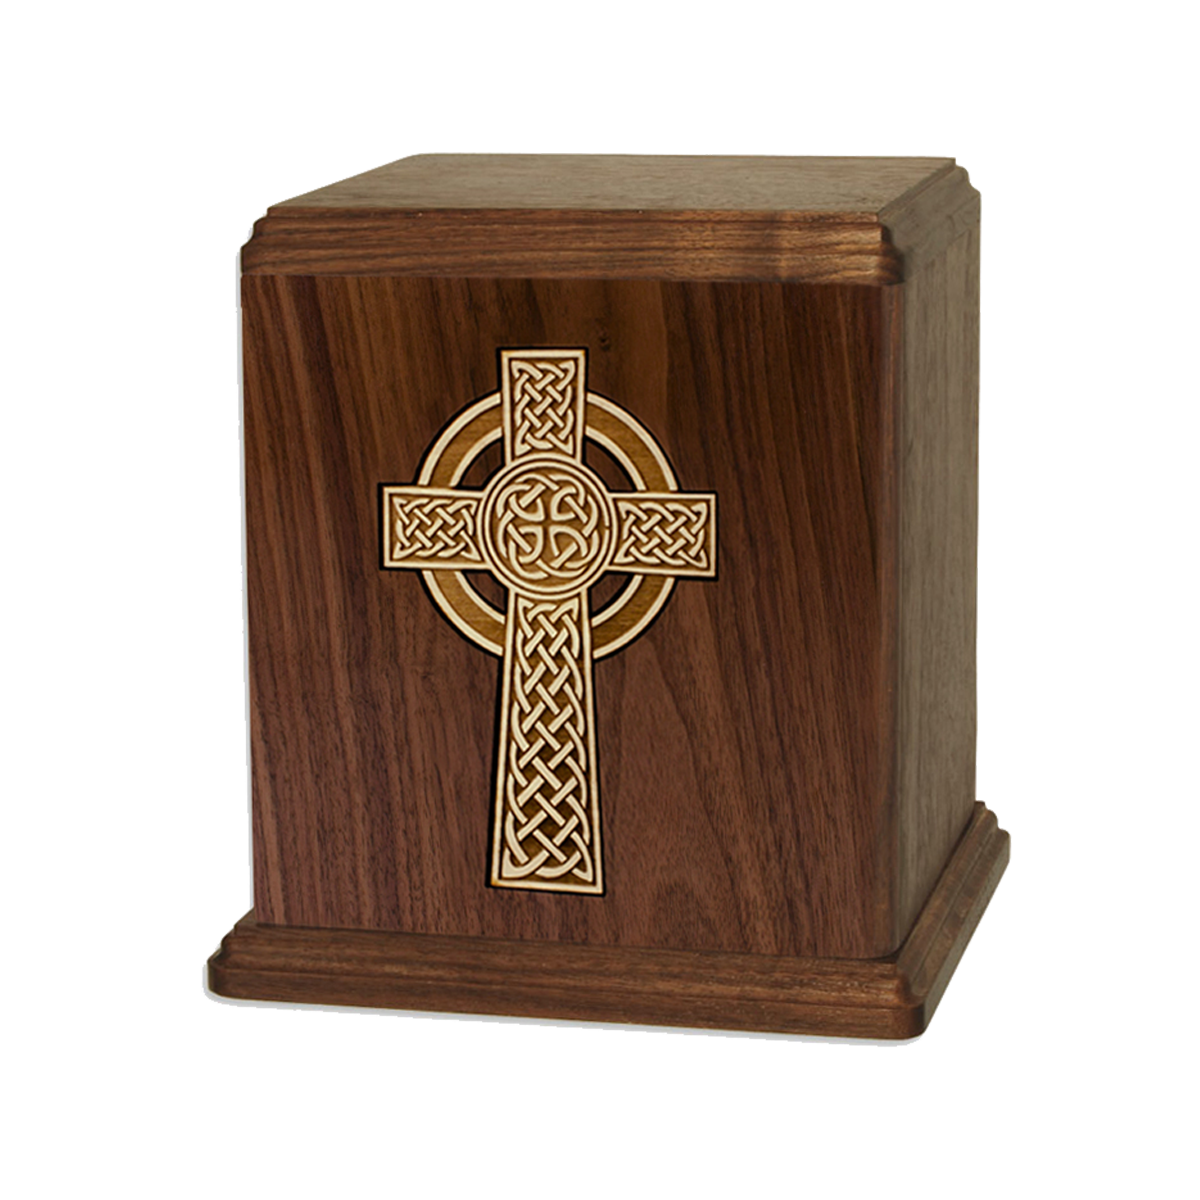 Celtic Cross Walnut Urn